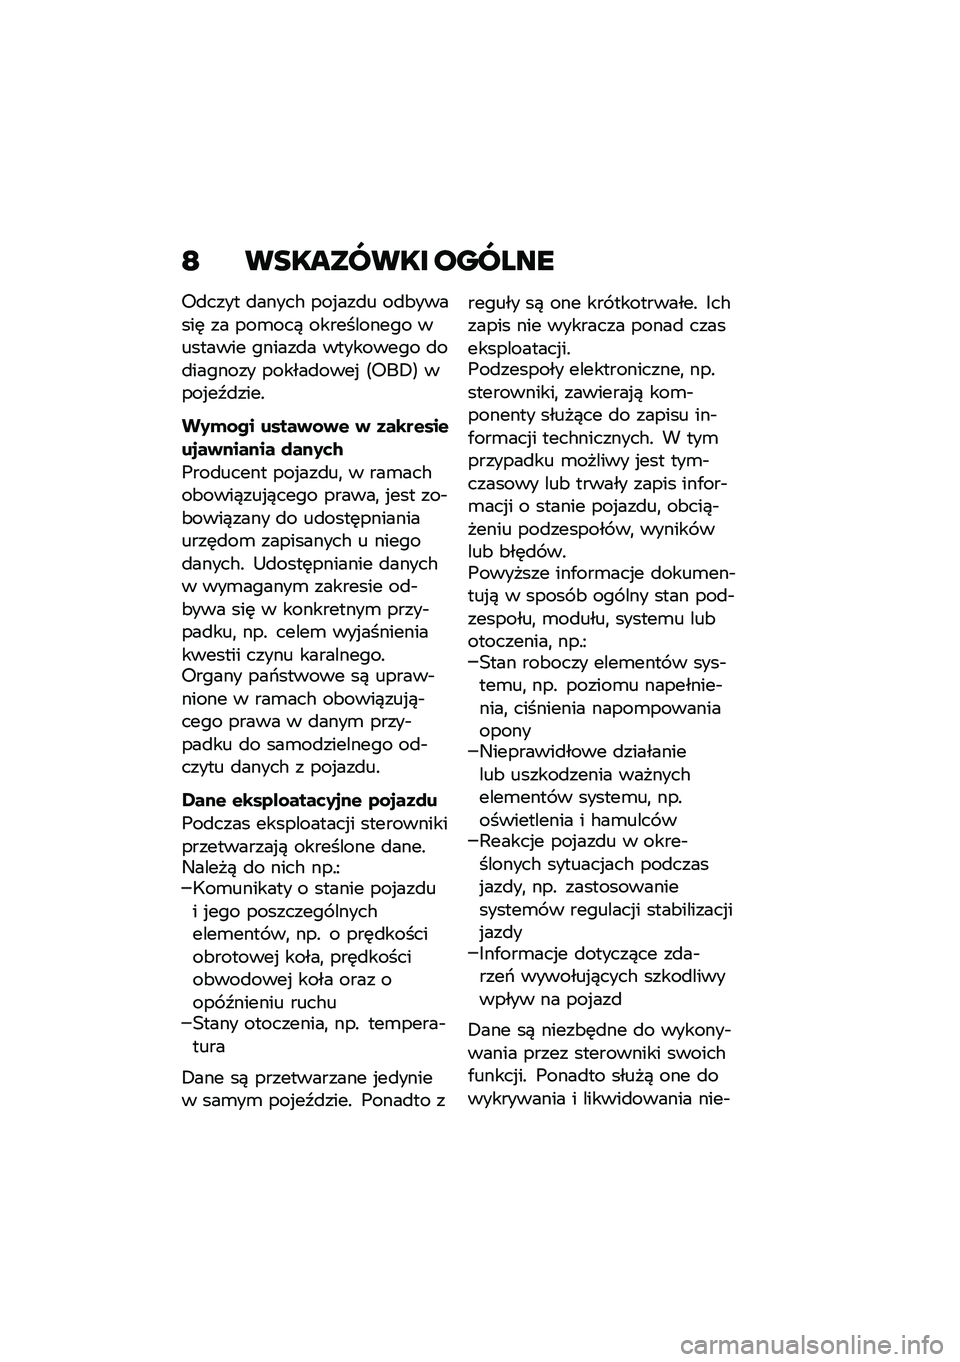 BMW MOTORRAD C 400 GT 2021  Instrukcja obsługi (in Polish) �E ��������� ������
�;�
���� �
�����# ���%���
� ��
�&������	 �� ���\b���) ����������� �������� ������
� ��������� �
��
���